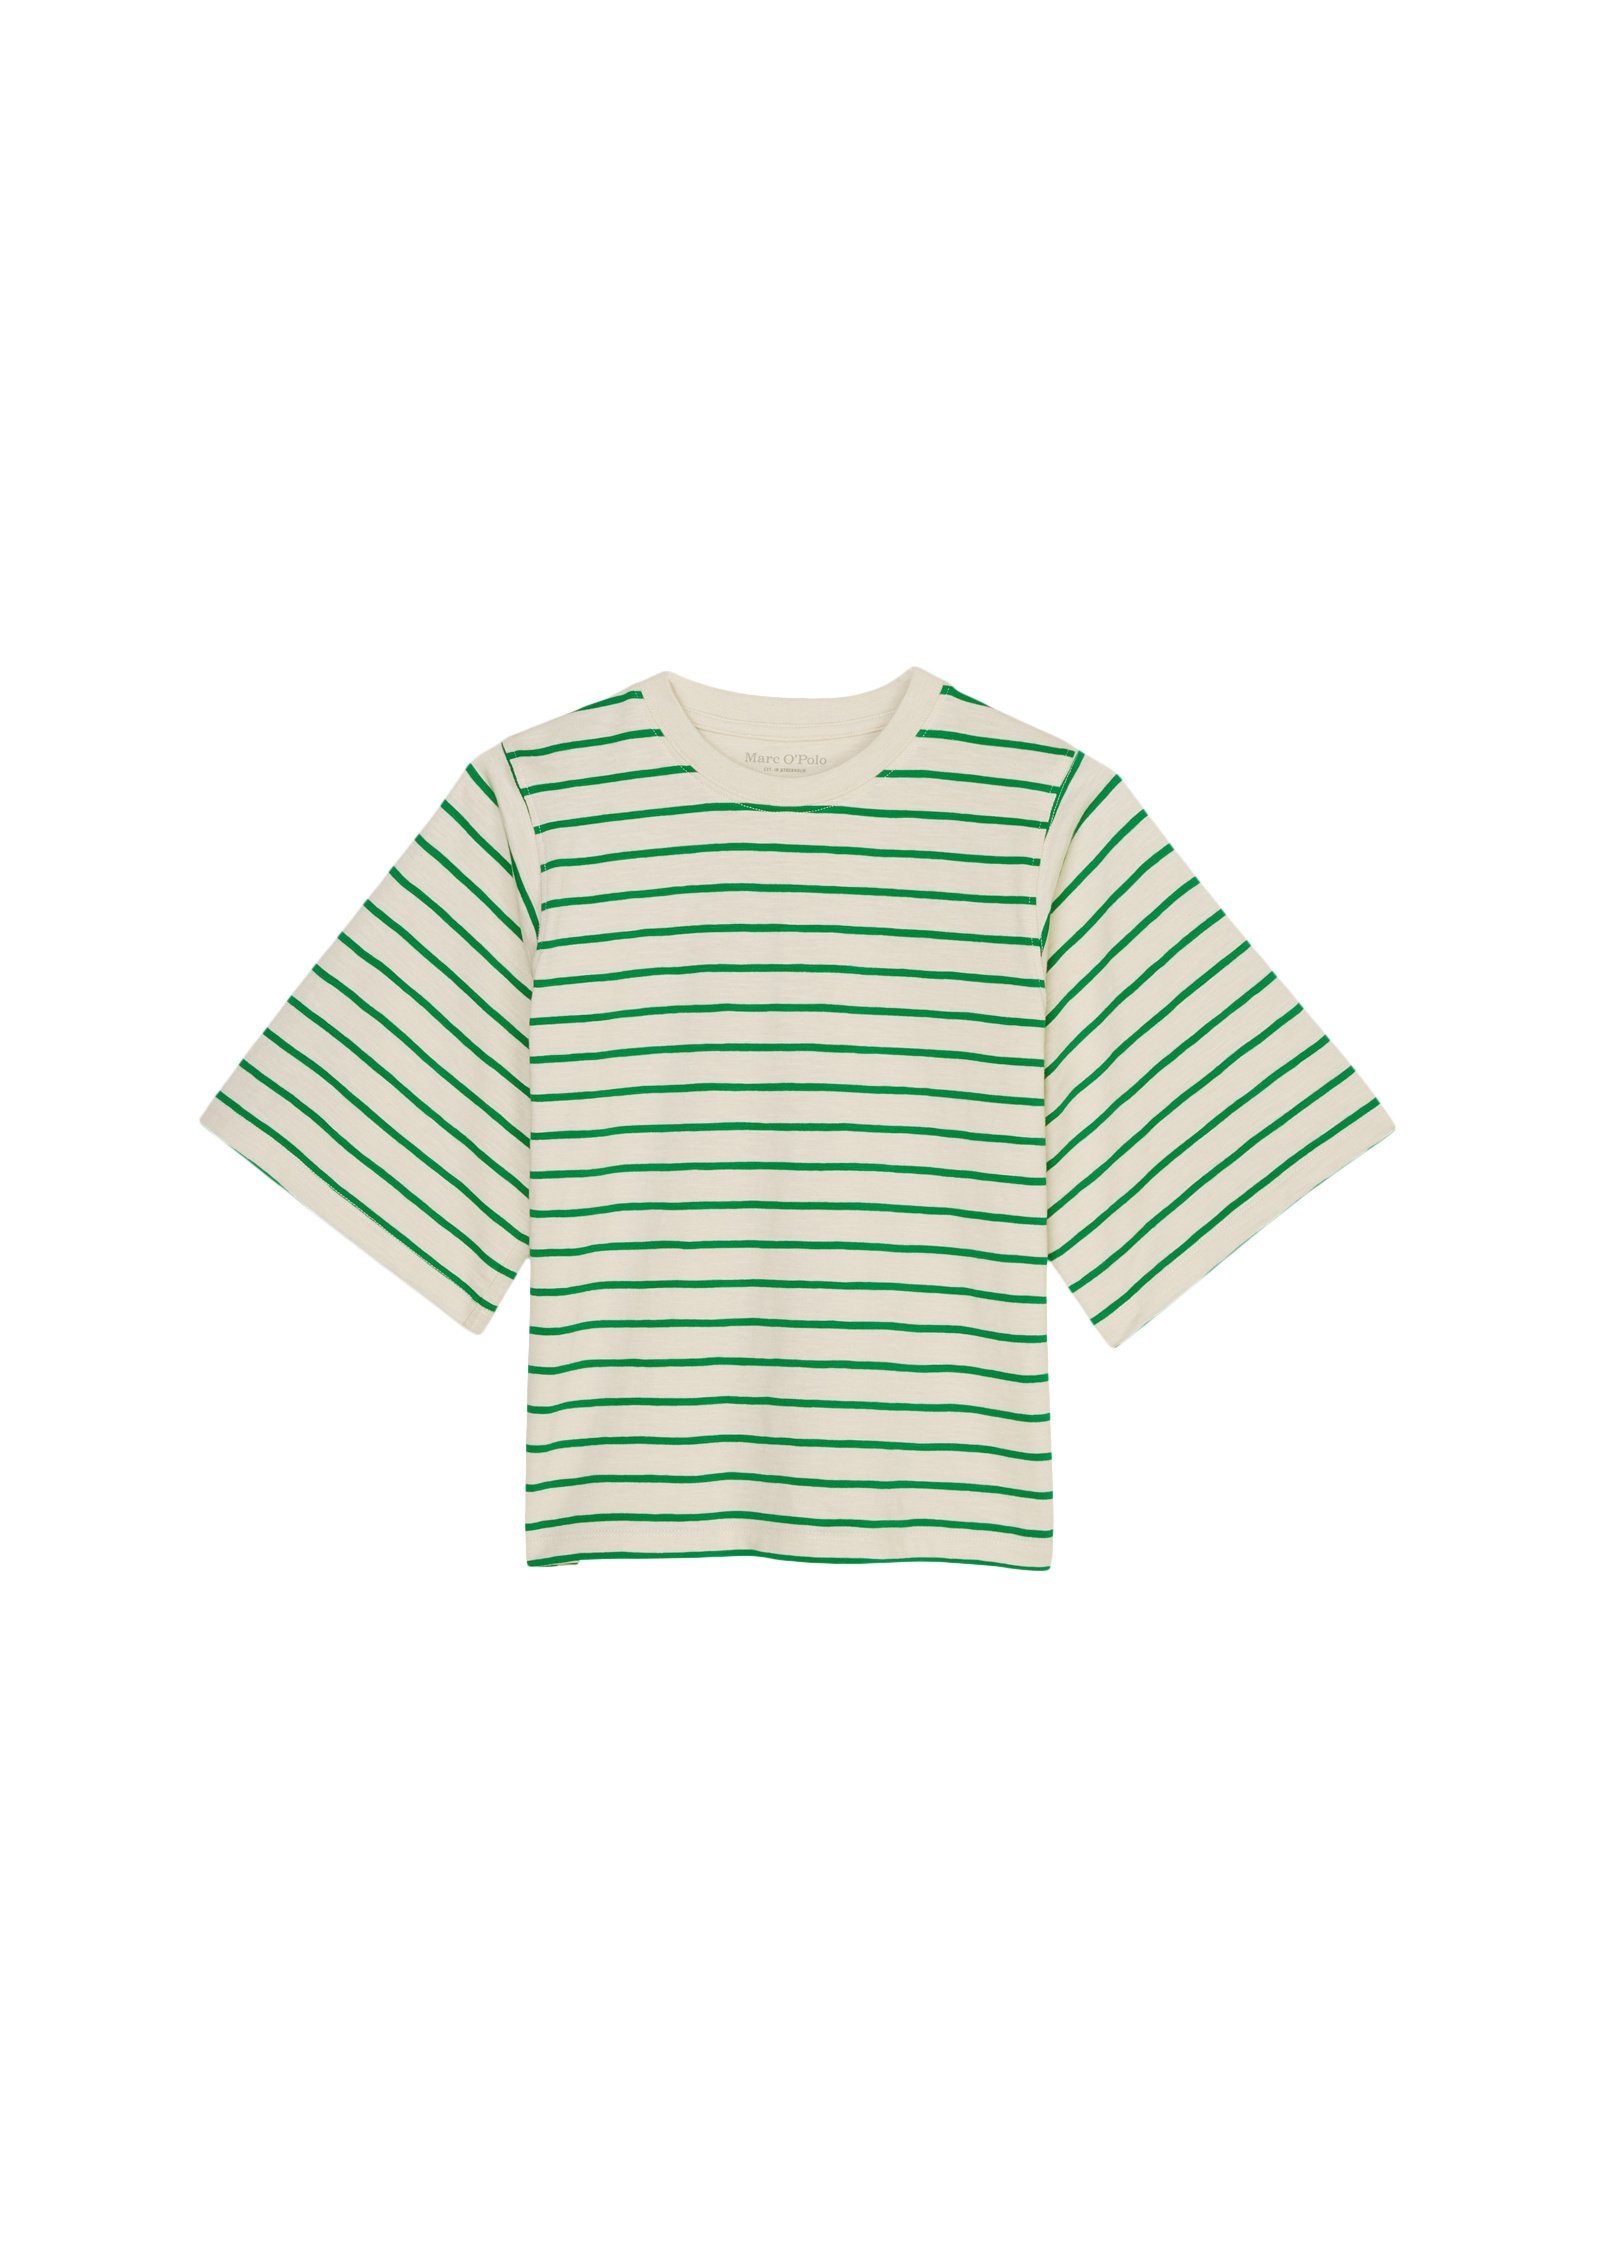 Marc O'Polo T-Shirt mit weiten Ärmeln grün